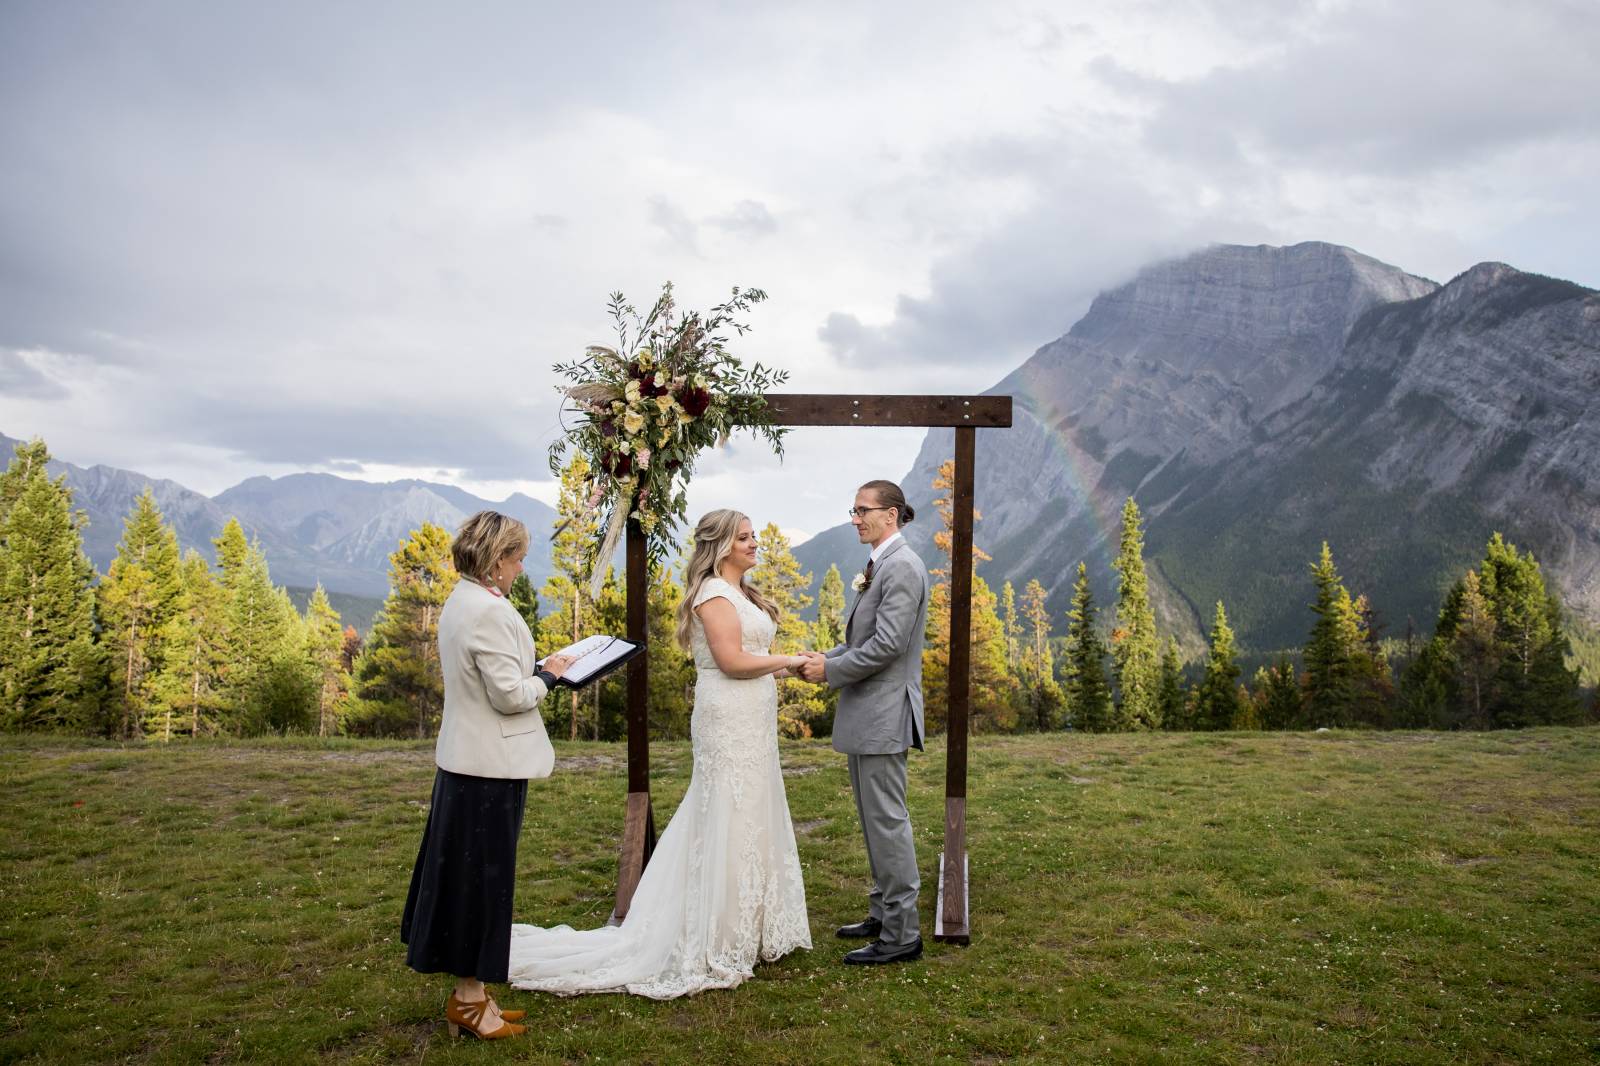 Tunnel Mountain Reservoir Banff, Banff Elopement Ceremony Location, Banff outdoor wedding ceremony l